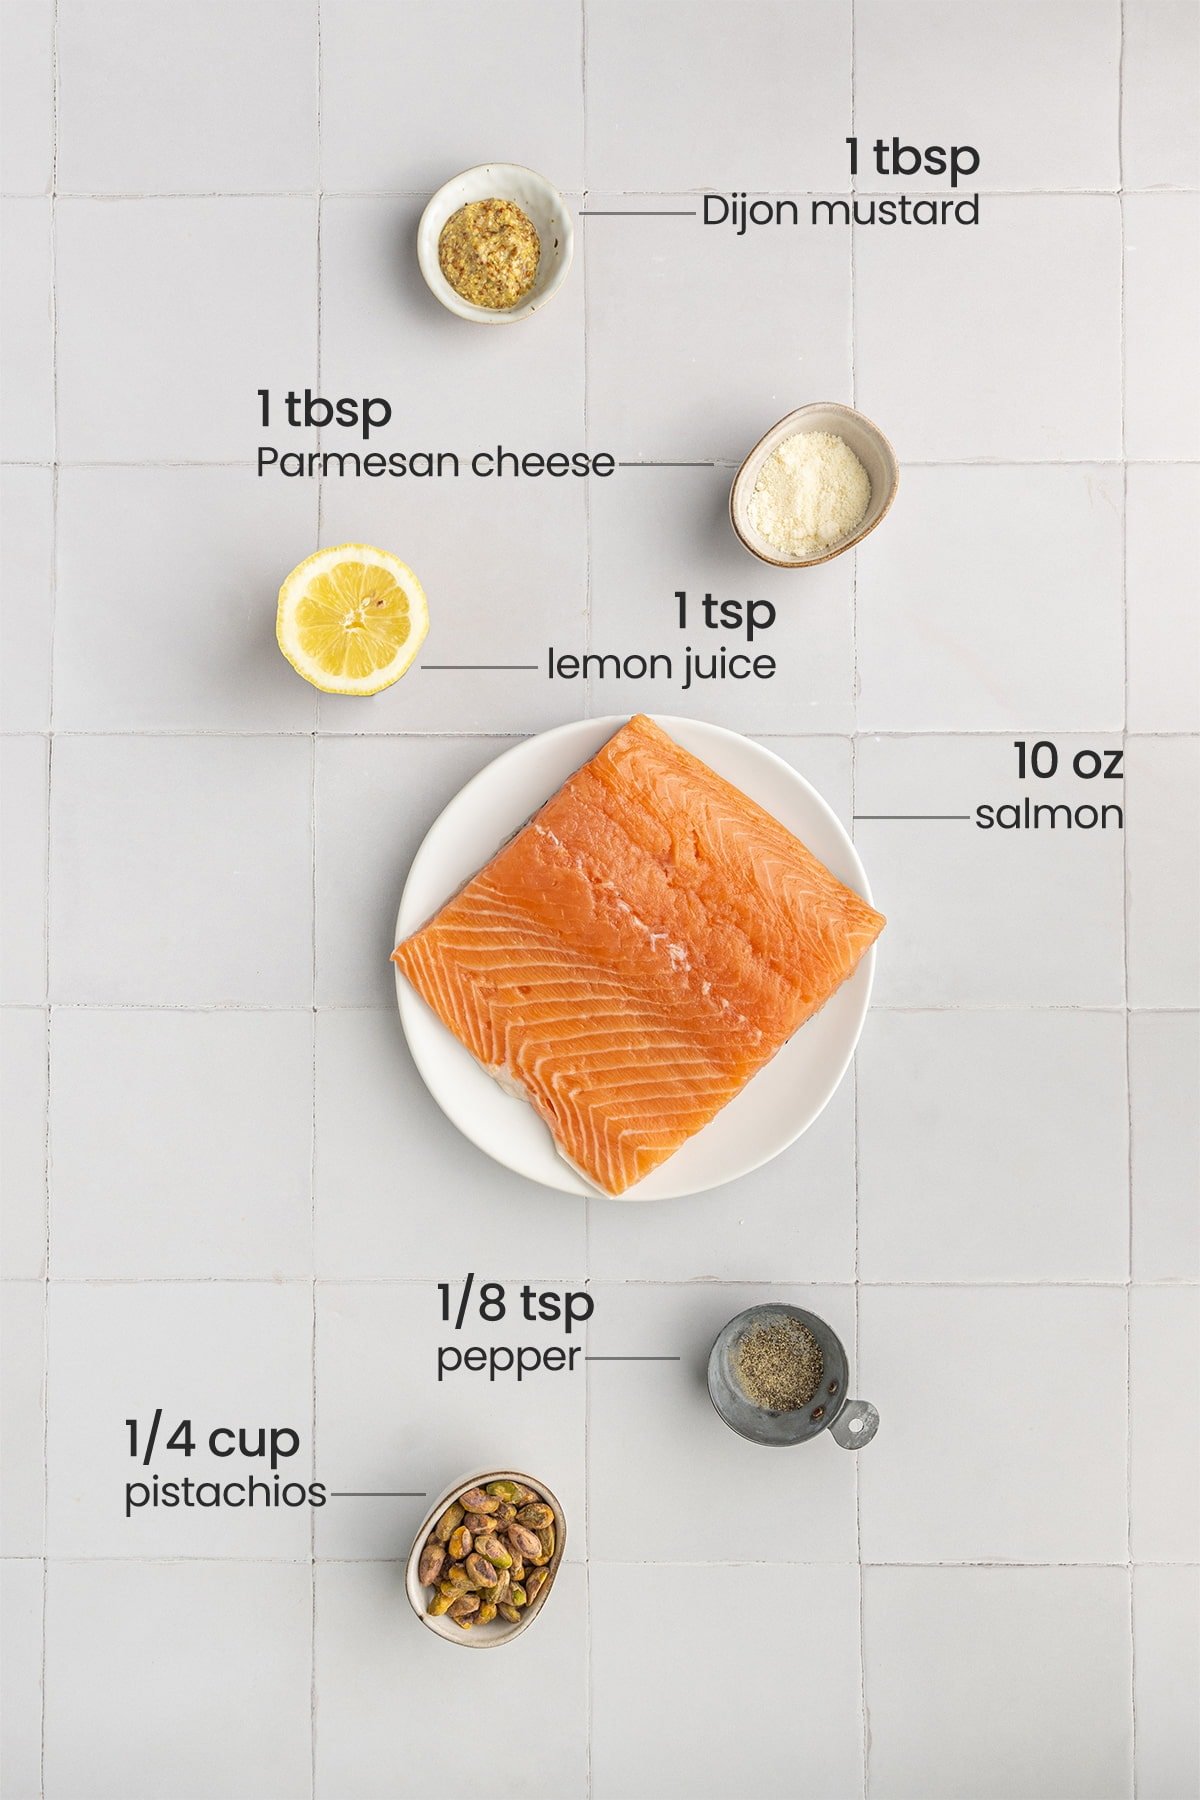 ingredients needed for pistachio crusted salmon - Dijon mustard, Parmesan cheese, lemon juice, salmon, pepper, pistachios